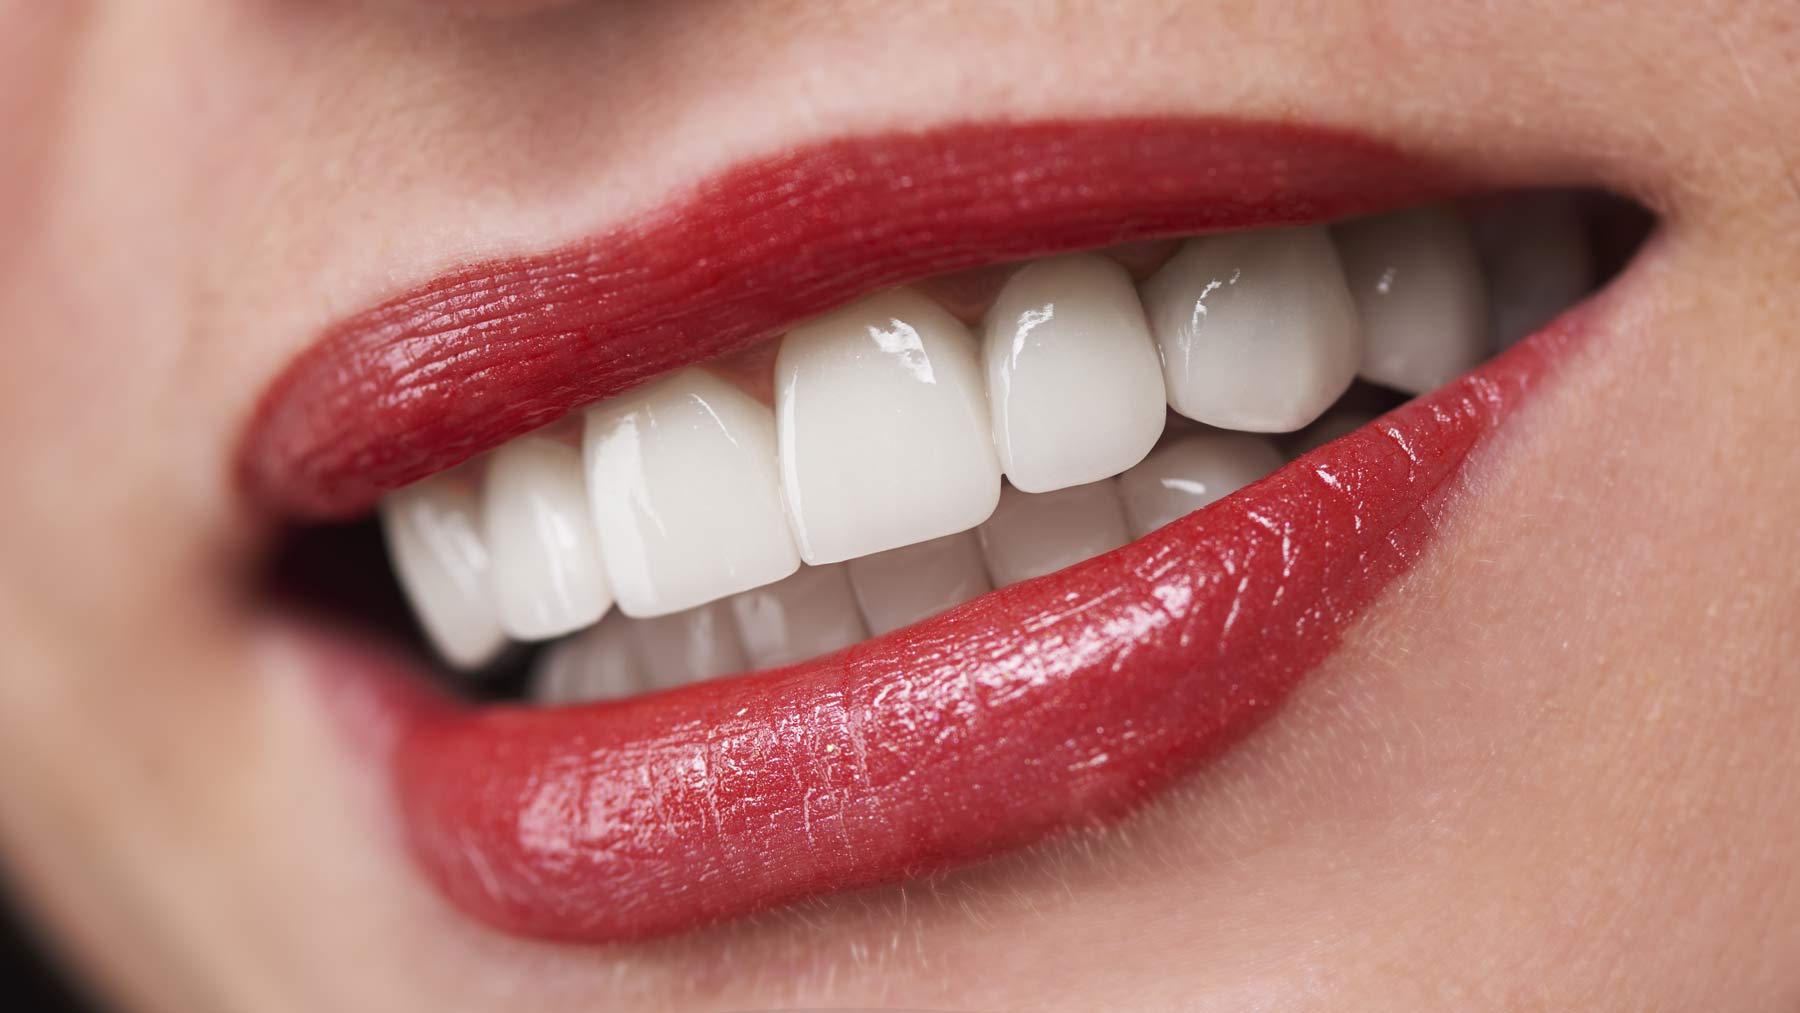 All-On-4 Dental Implants - Dr. Stephanie Sfiroudis New Teeth in a Day!